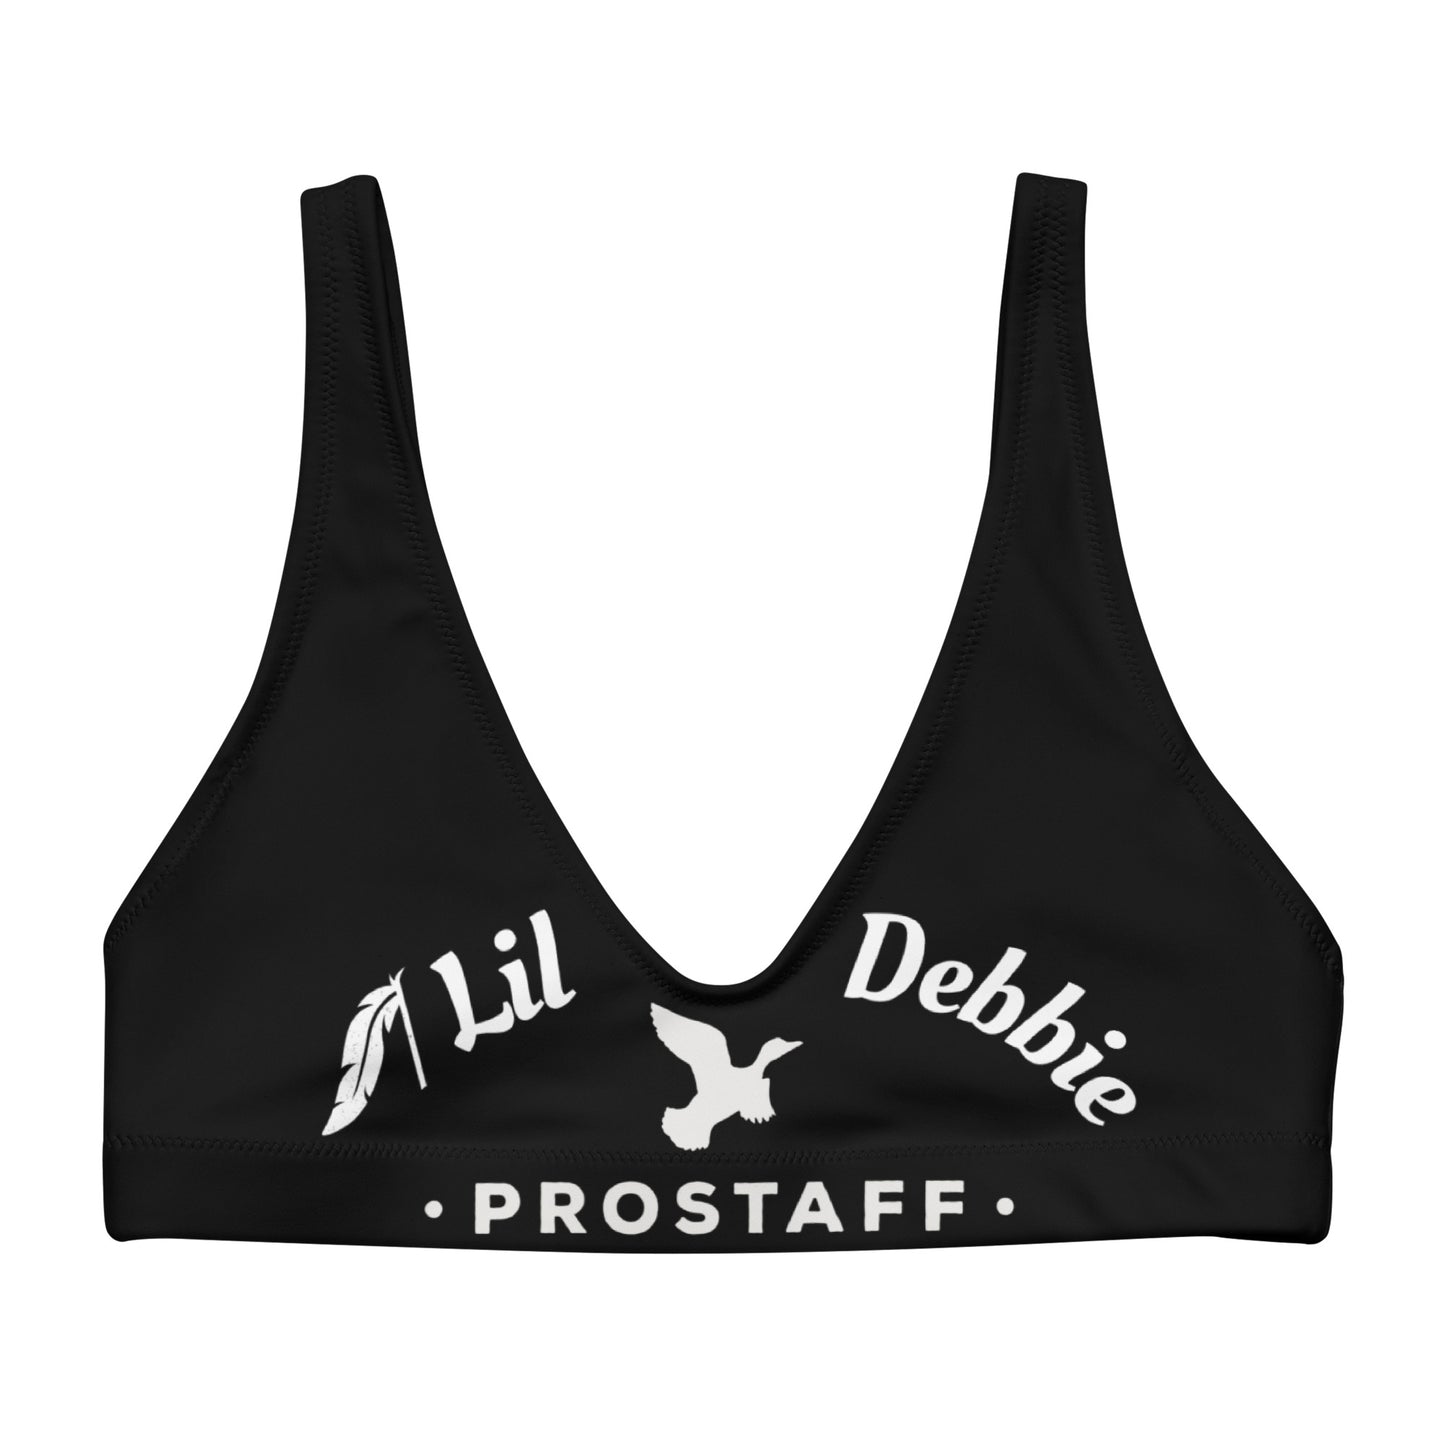 DH Lil' Debbie Prostaff Bikini Top in Black